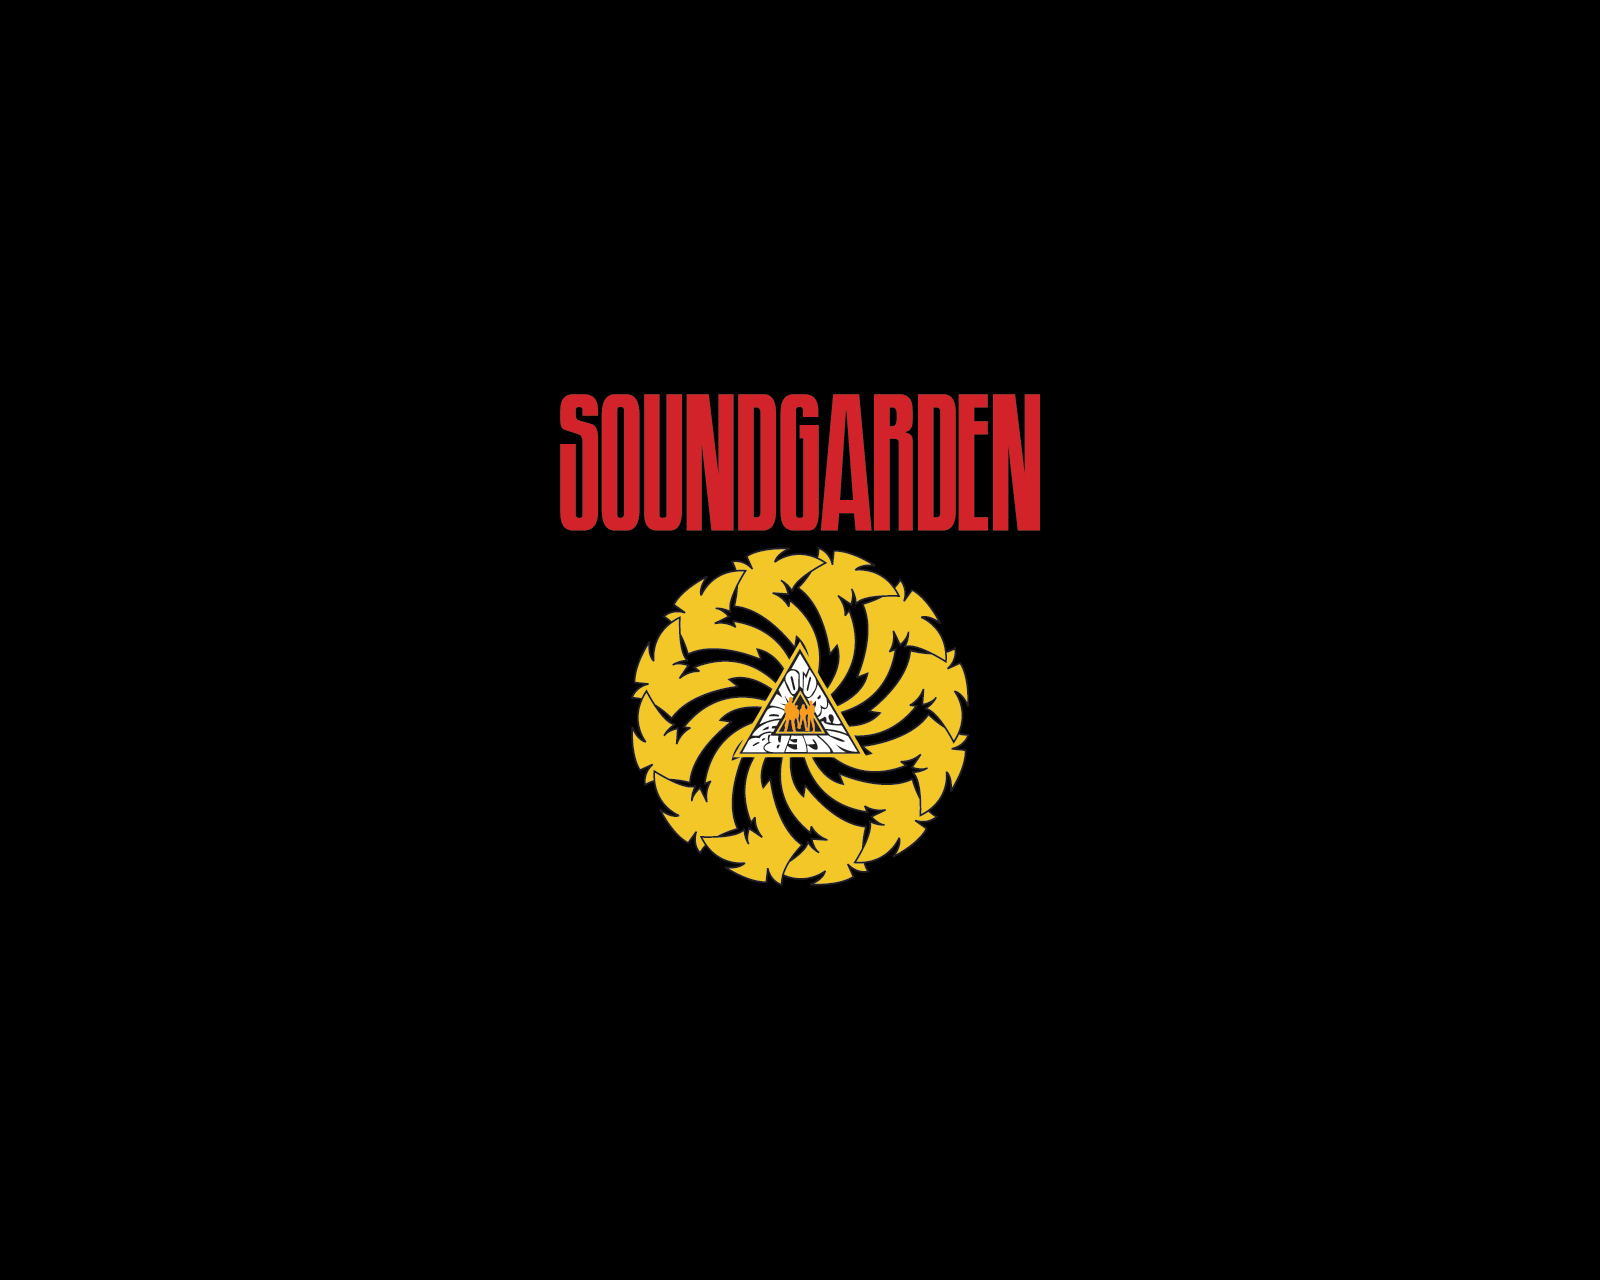 Popular Soundgarden Image for Phone